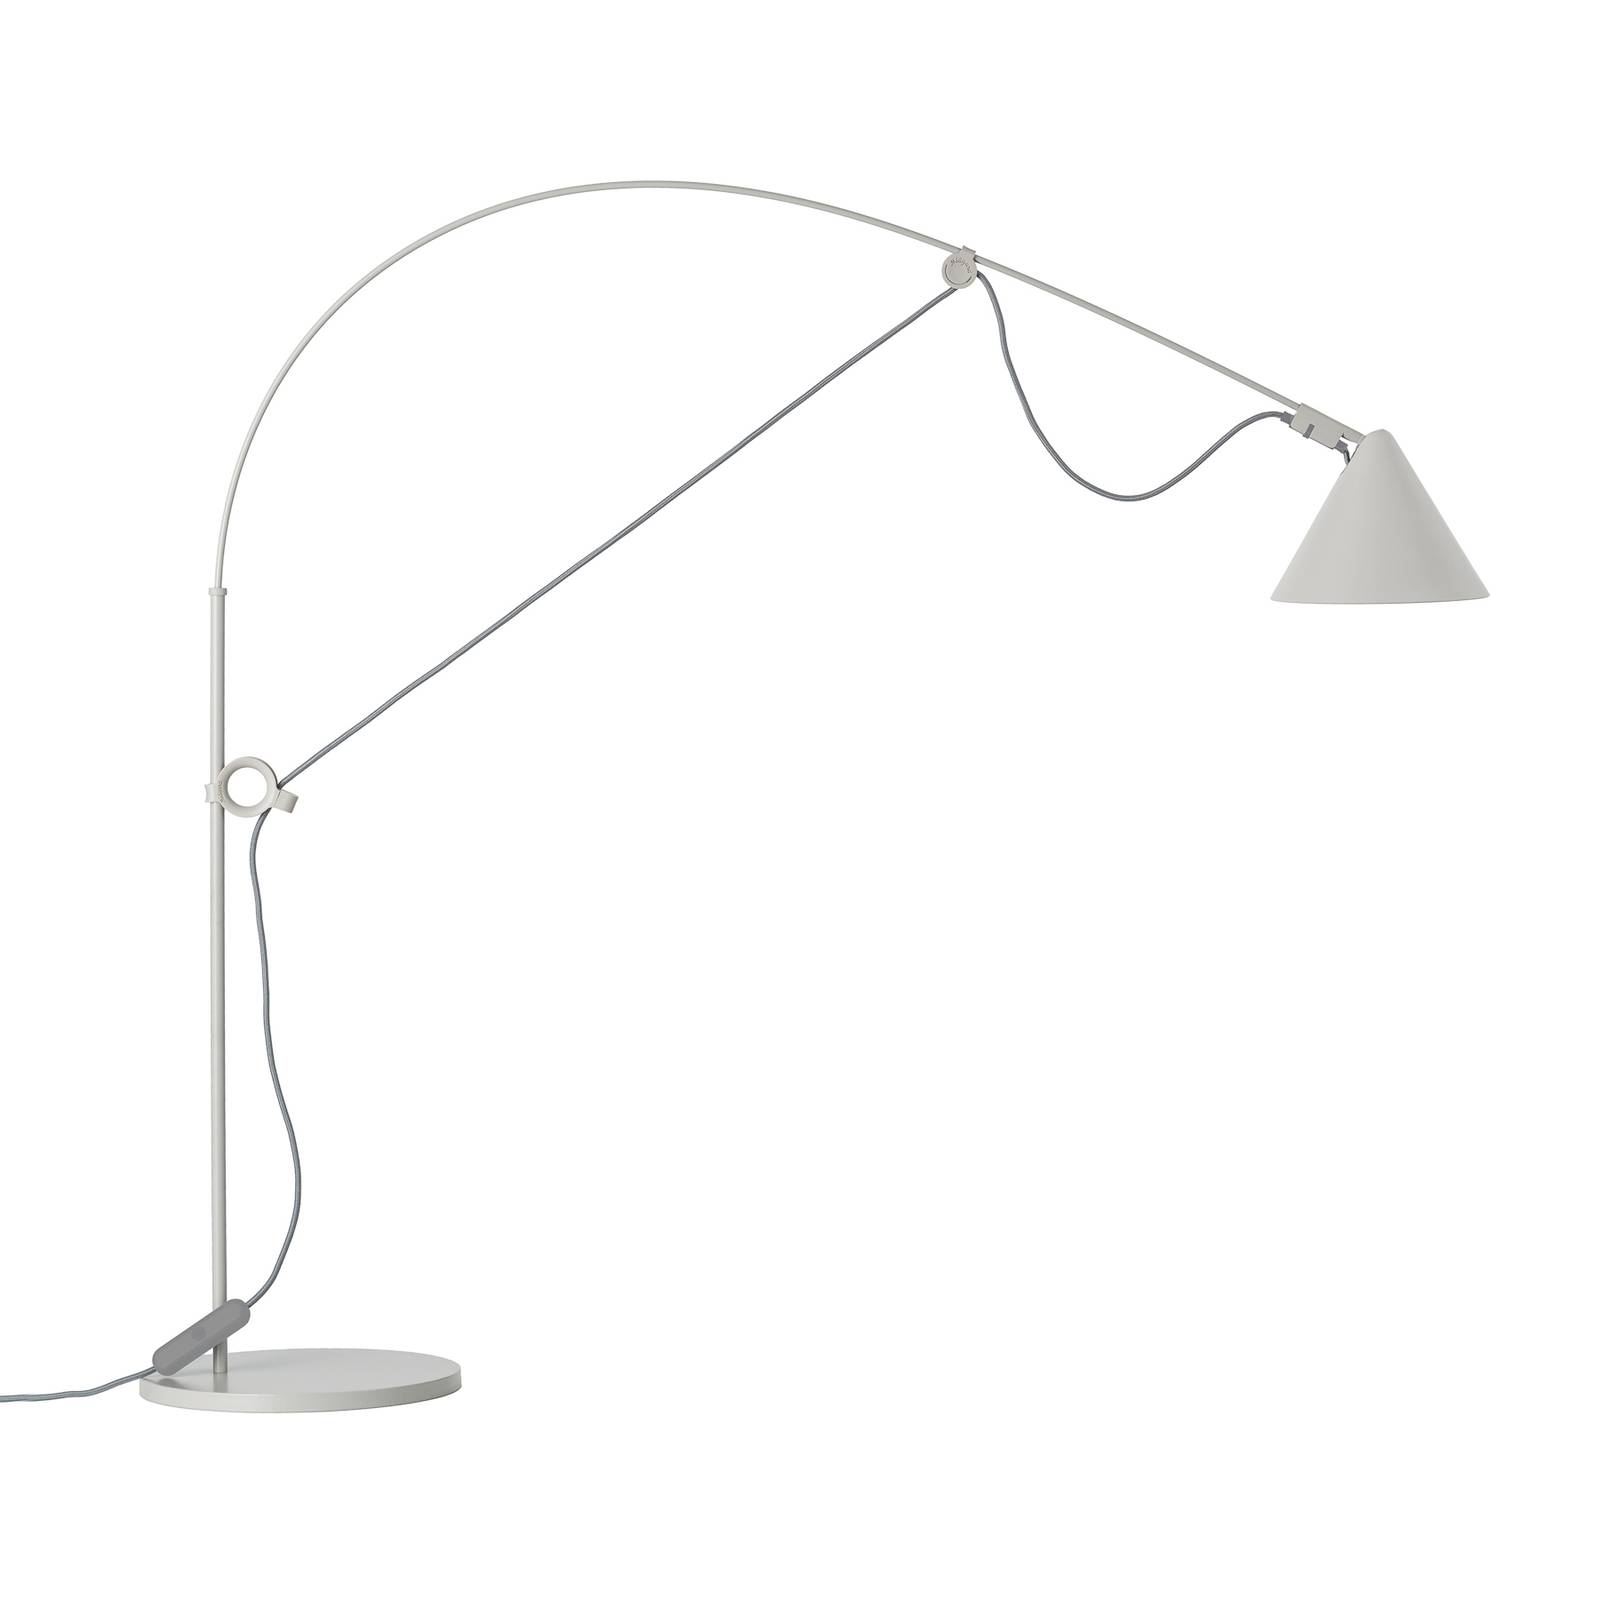 Image of midgard AYNO S lampe de table grise/grise 2 700 K 4262364810305